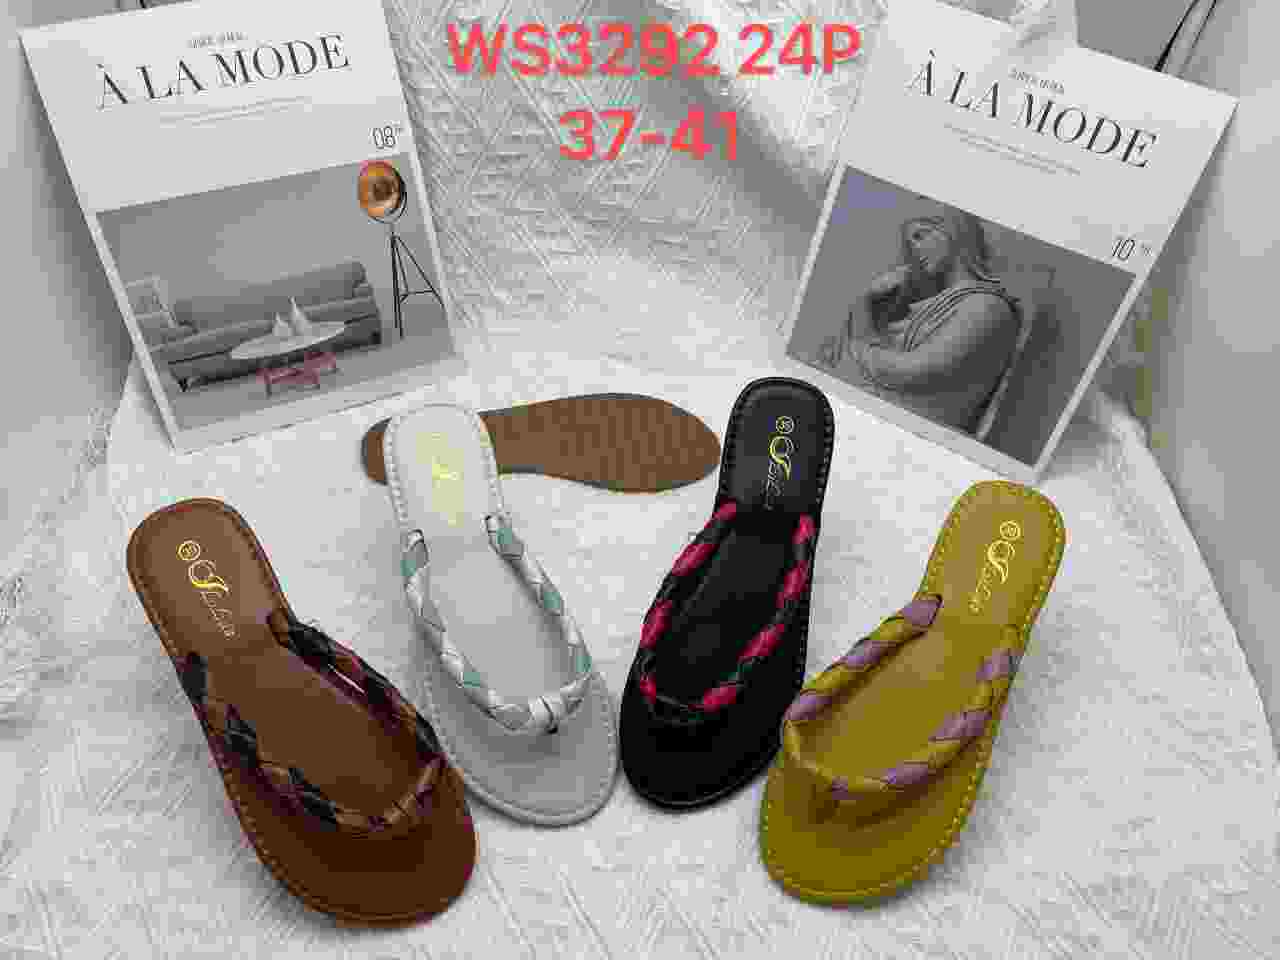 Ladies stylish Sandal shoes WS3292 24P